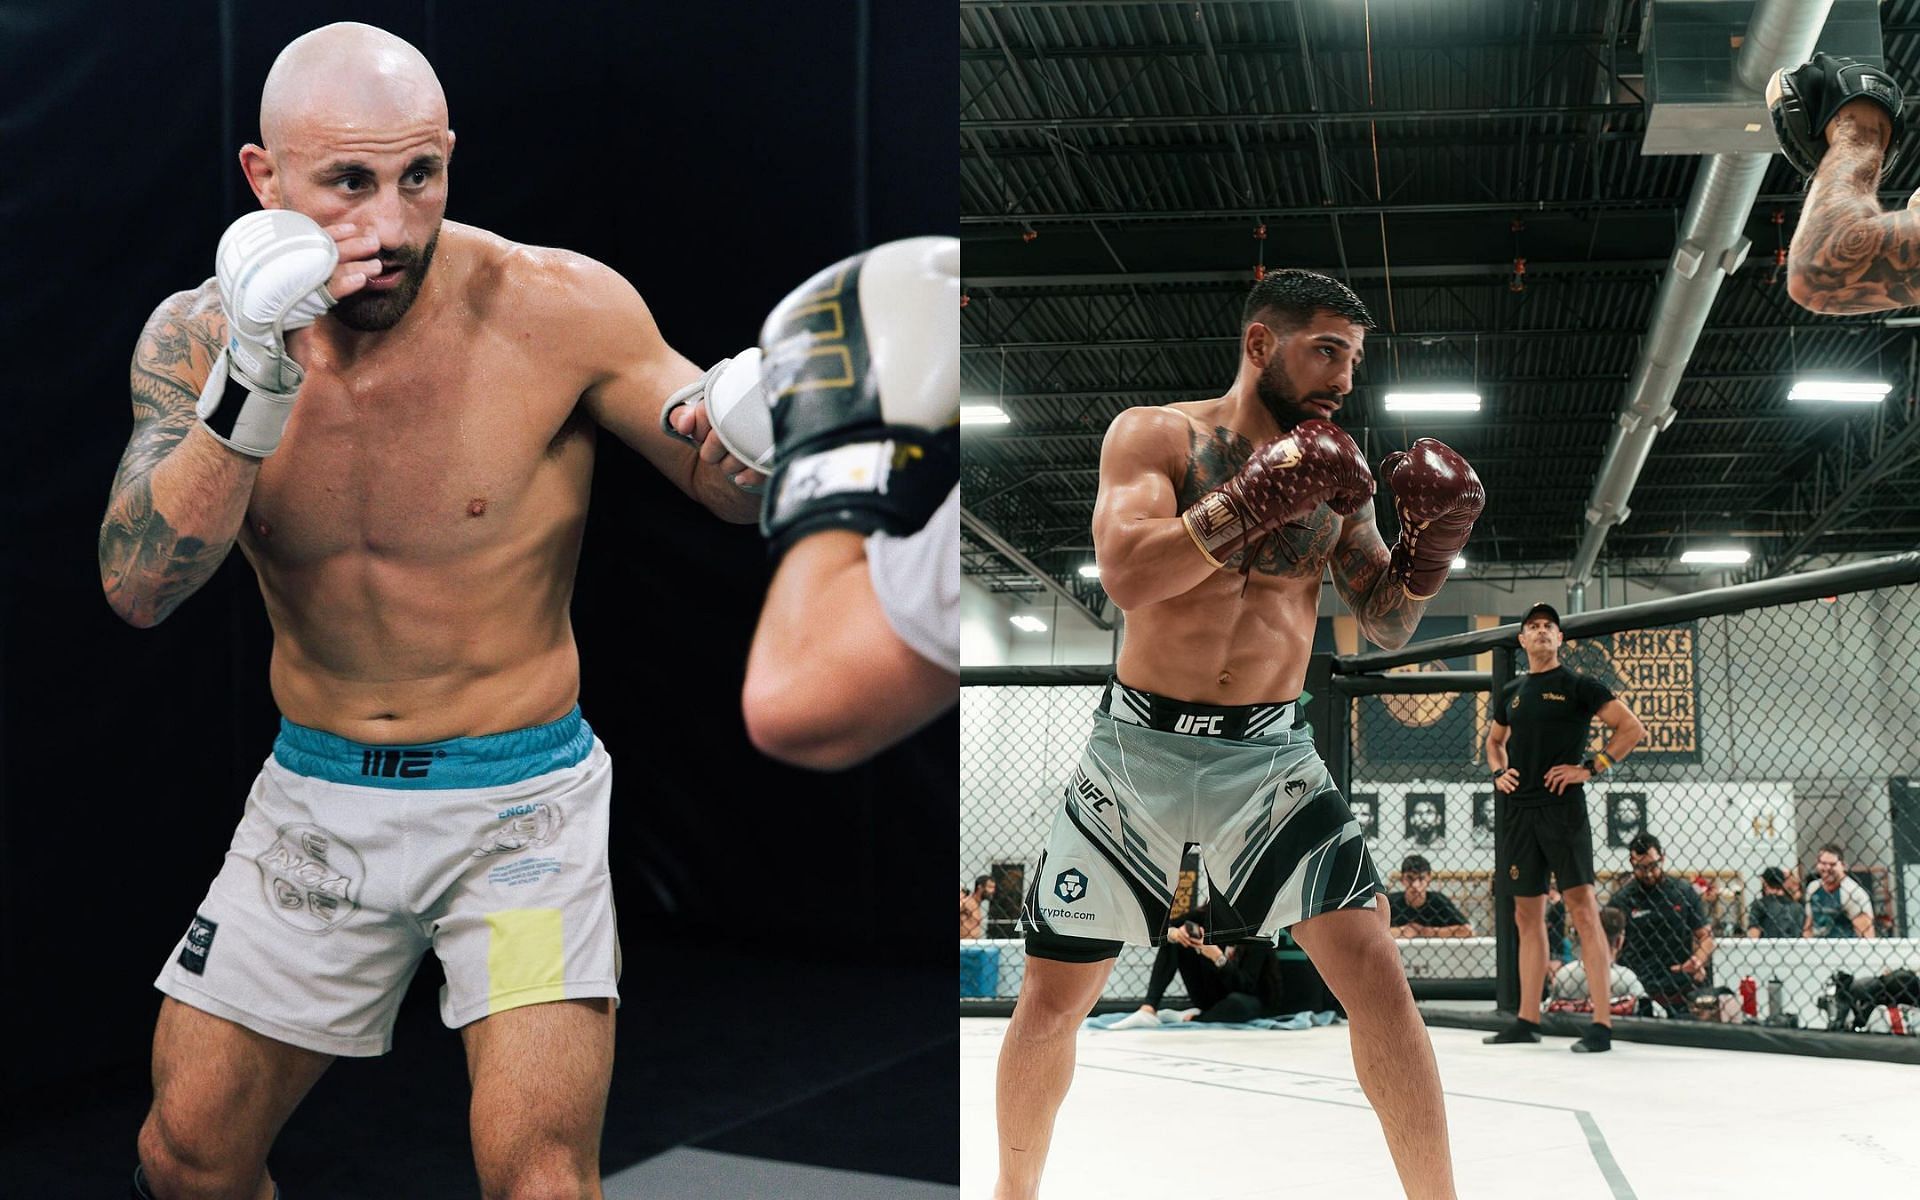 Alexander Volkanovski (left) delivers warning to Ilia Topuria.(right) ahead of their fight at UFC 298 [Image via: @alexvolkanovski and @iliatopuria on Instagram]